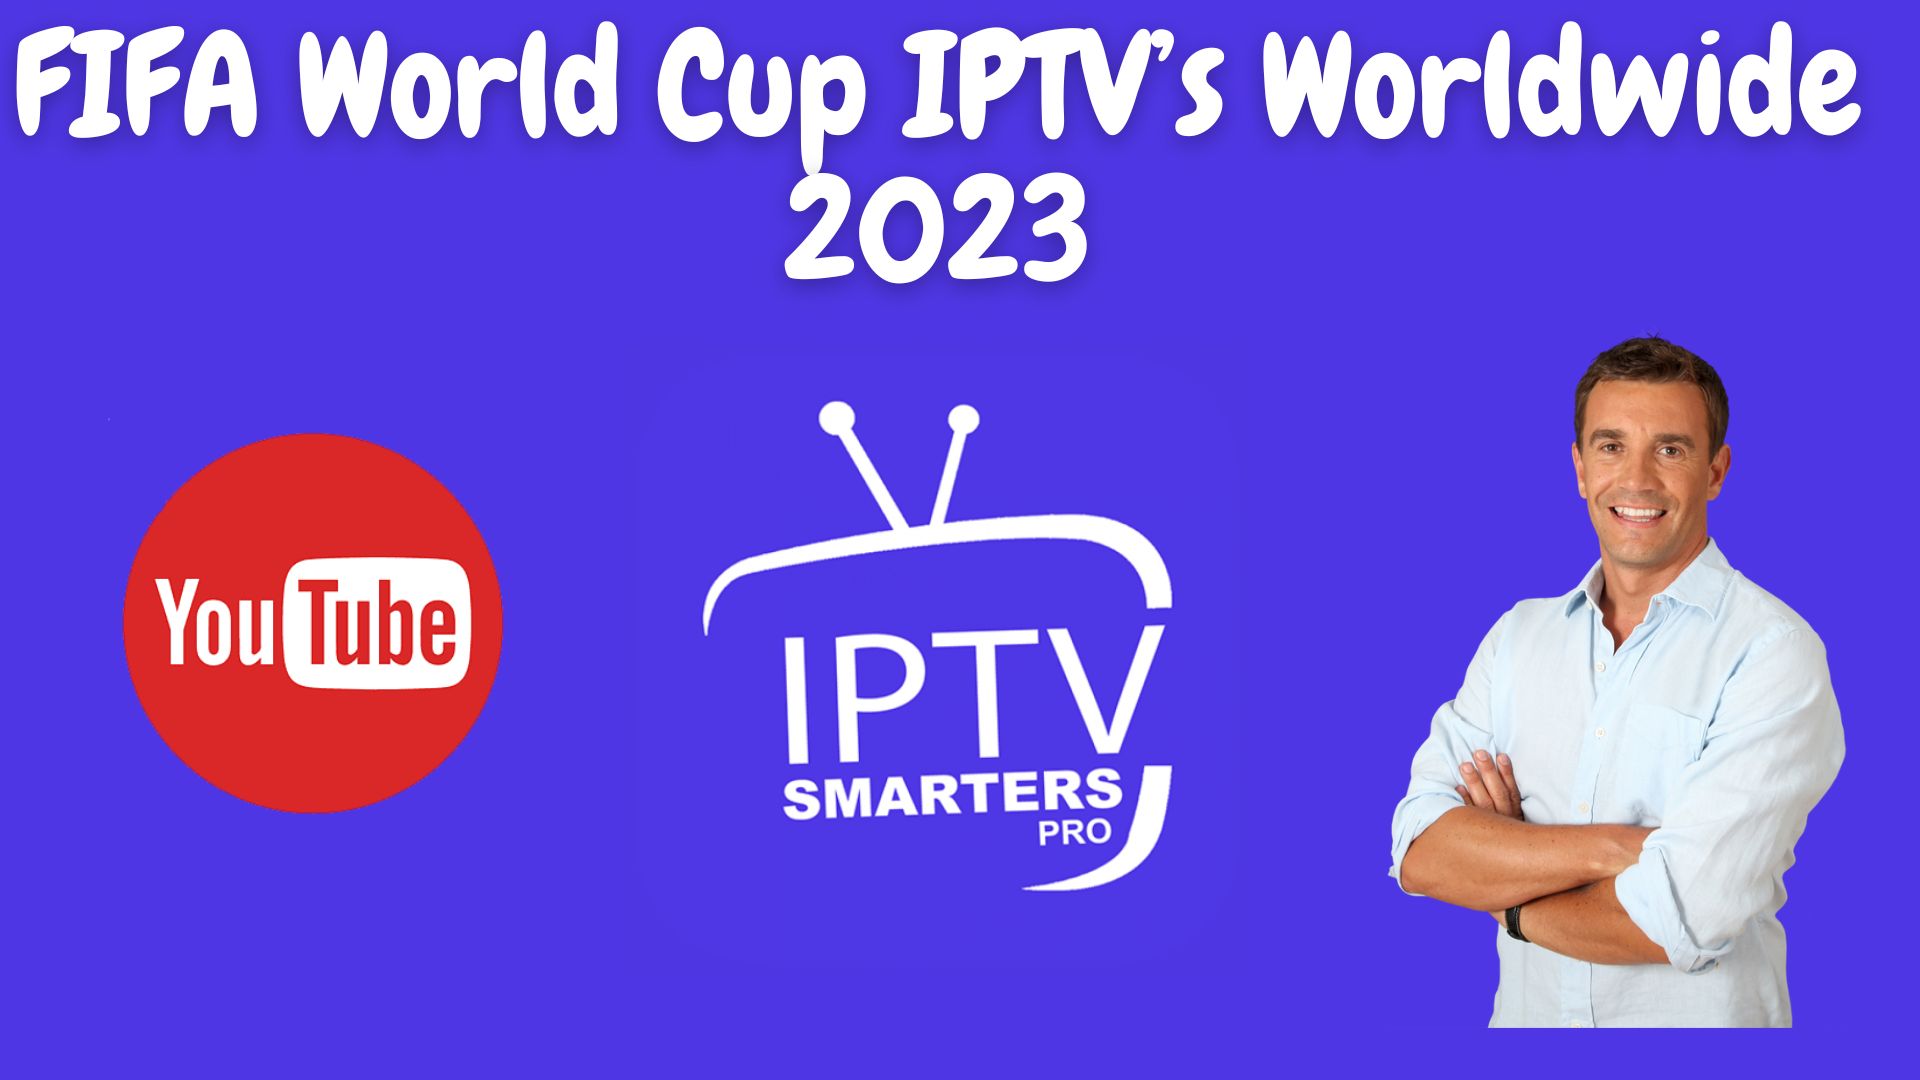 Fifa world cup iptv’s worldwide 2023